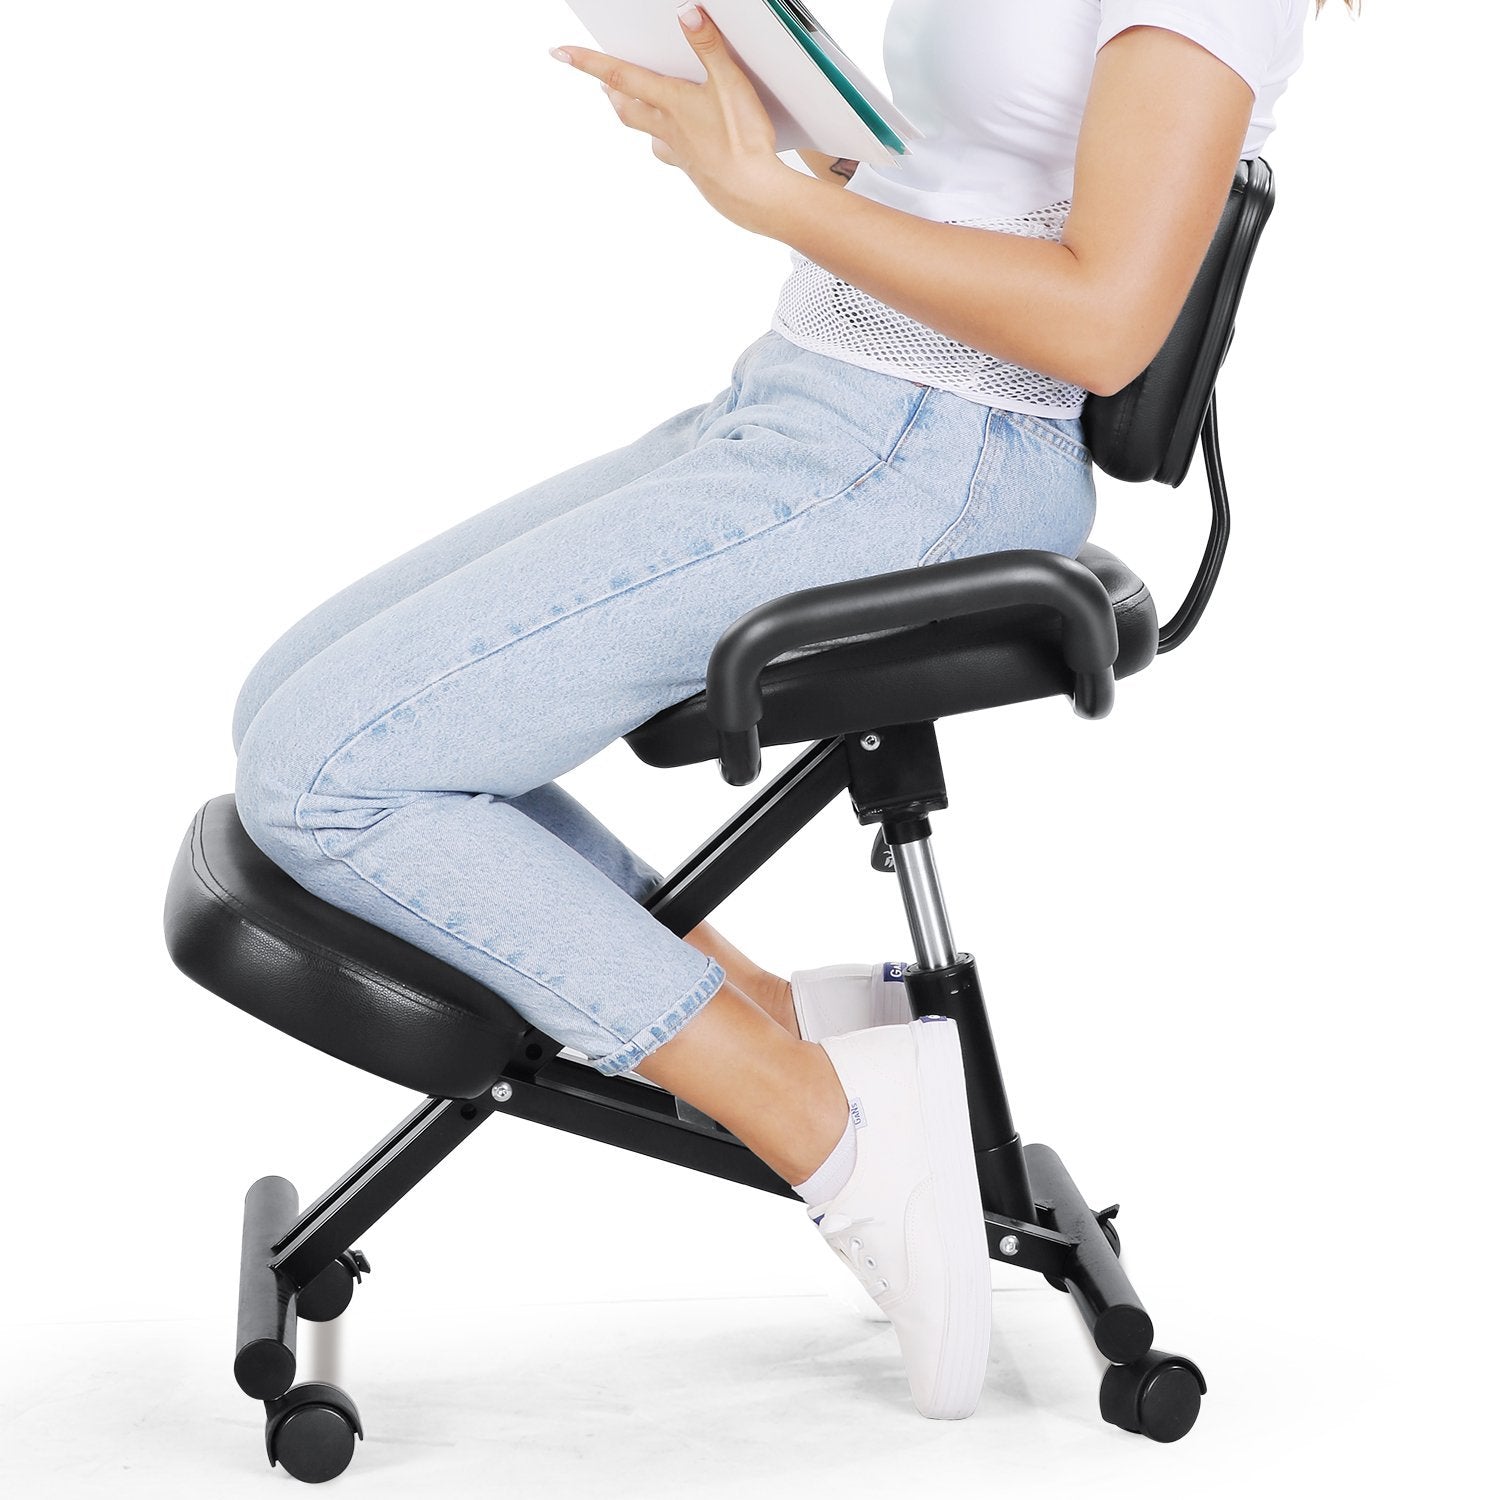 Adjustable Kneeling Chair - Ergonomic Office Chair